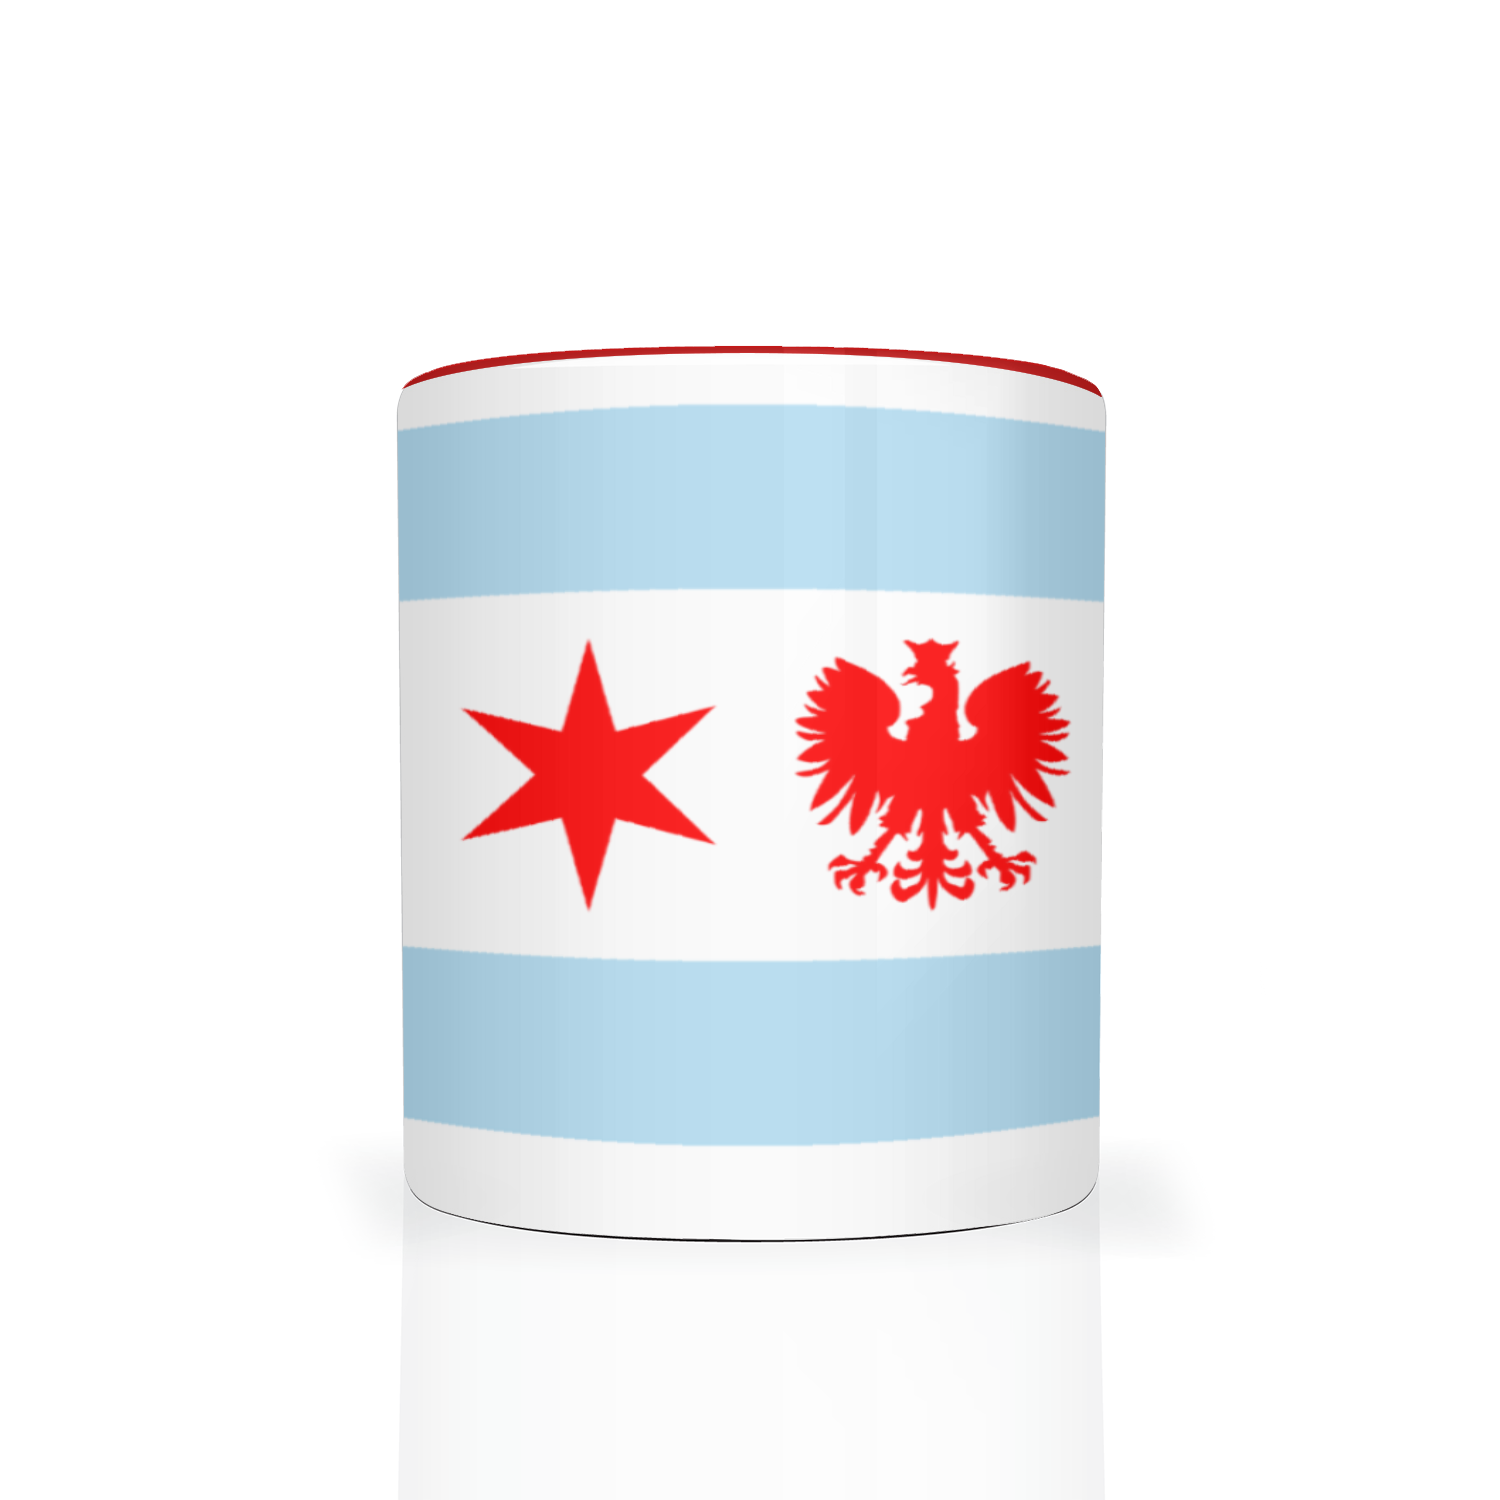 Chicago Flag Polish Single Eagle 2 Tone 11oz Mug